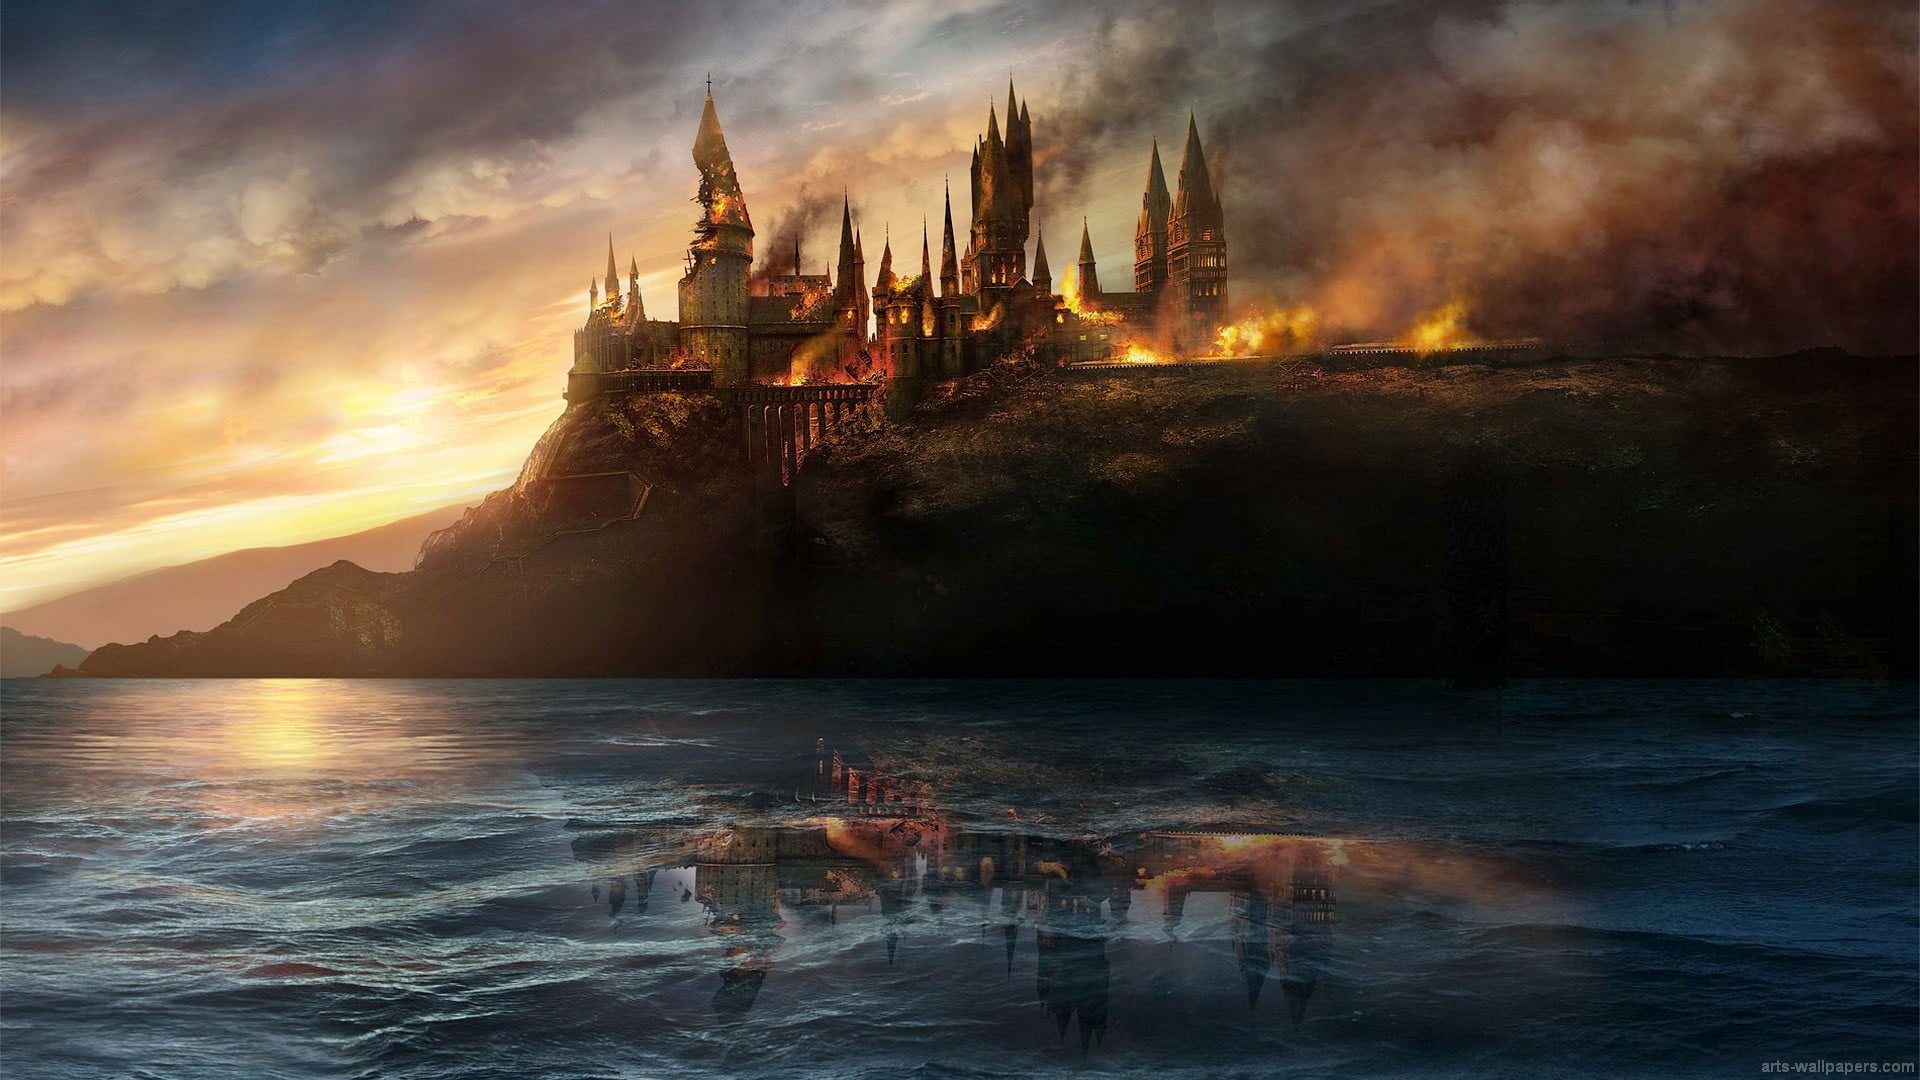 Burning Castle Wallpaper, Harry Potter, Hogwarts